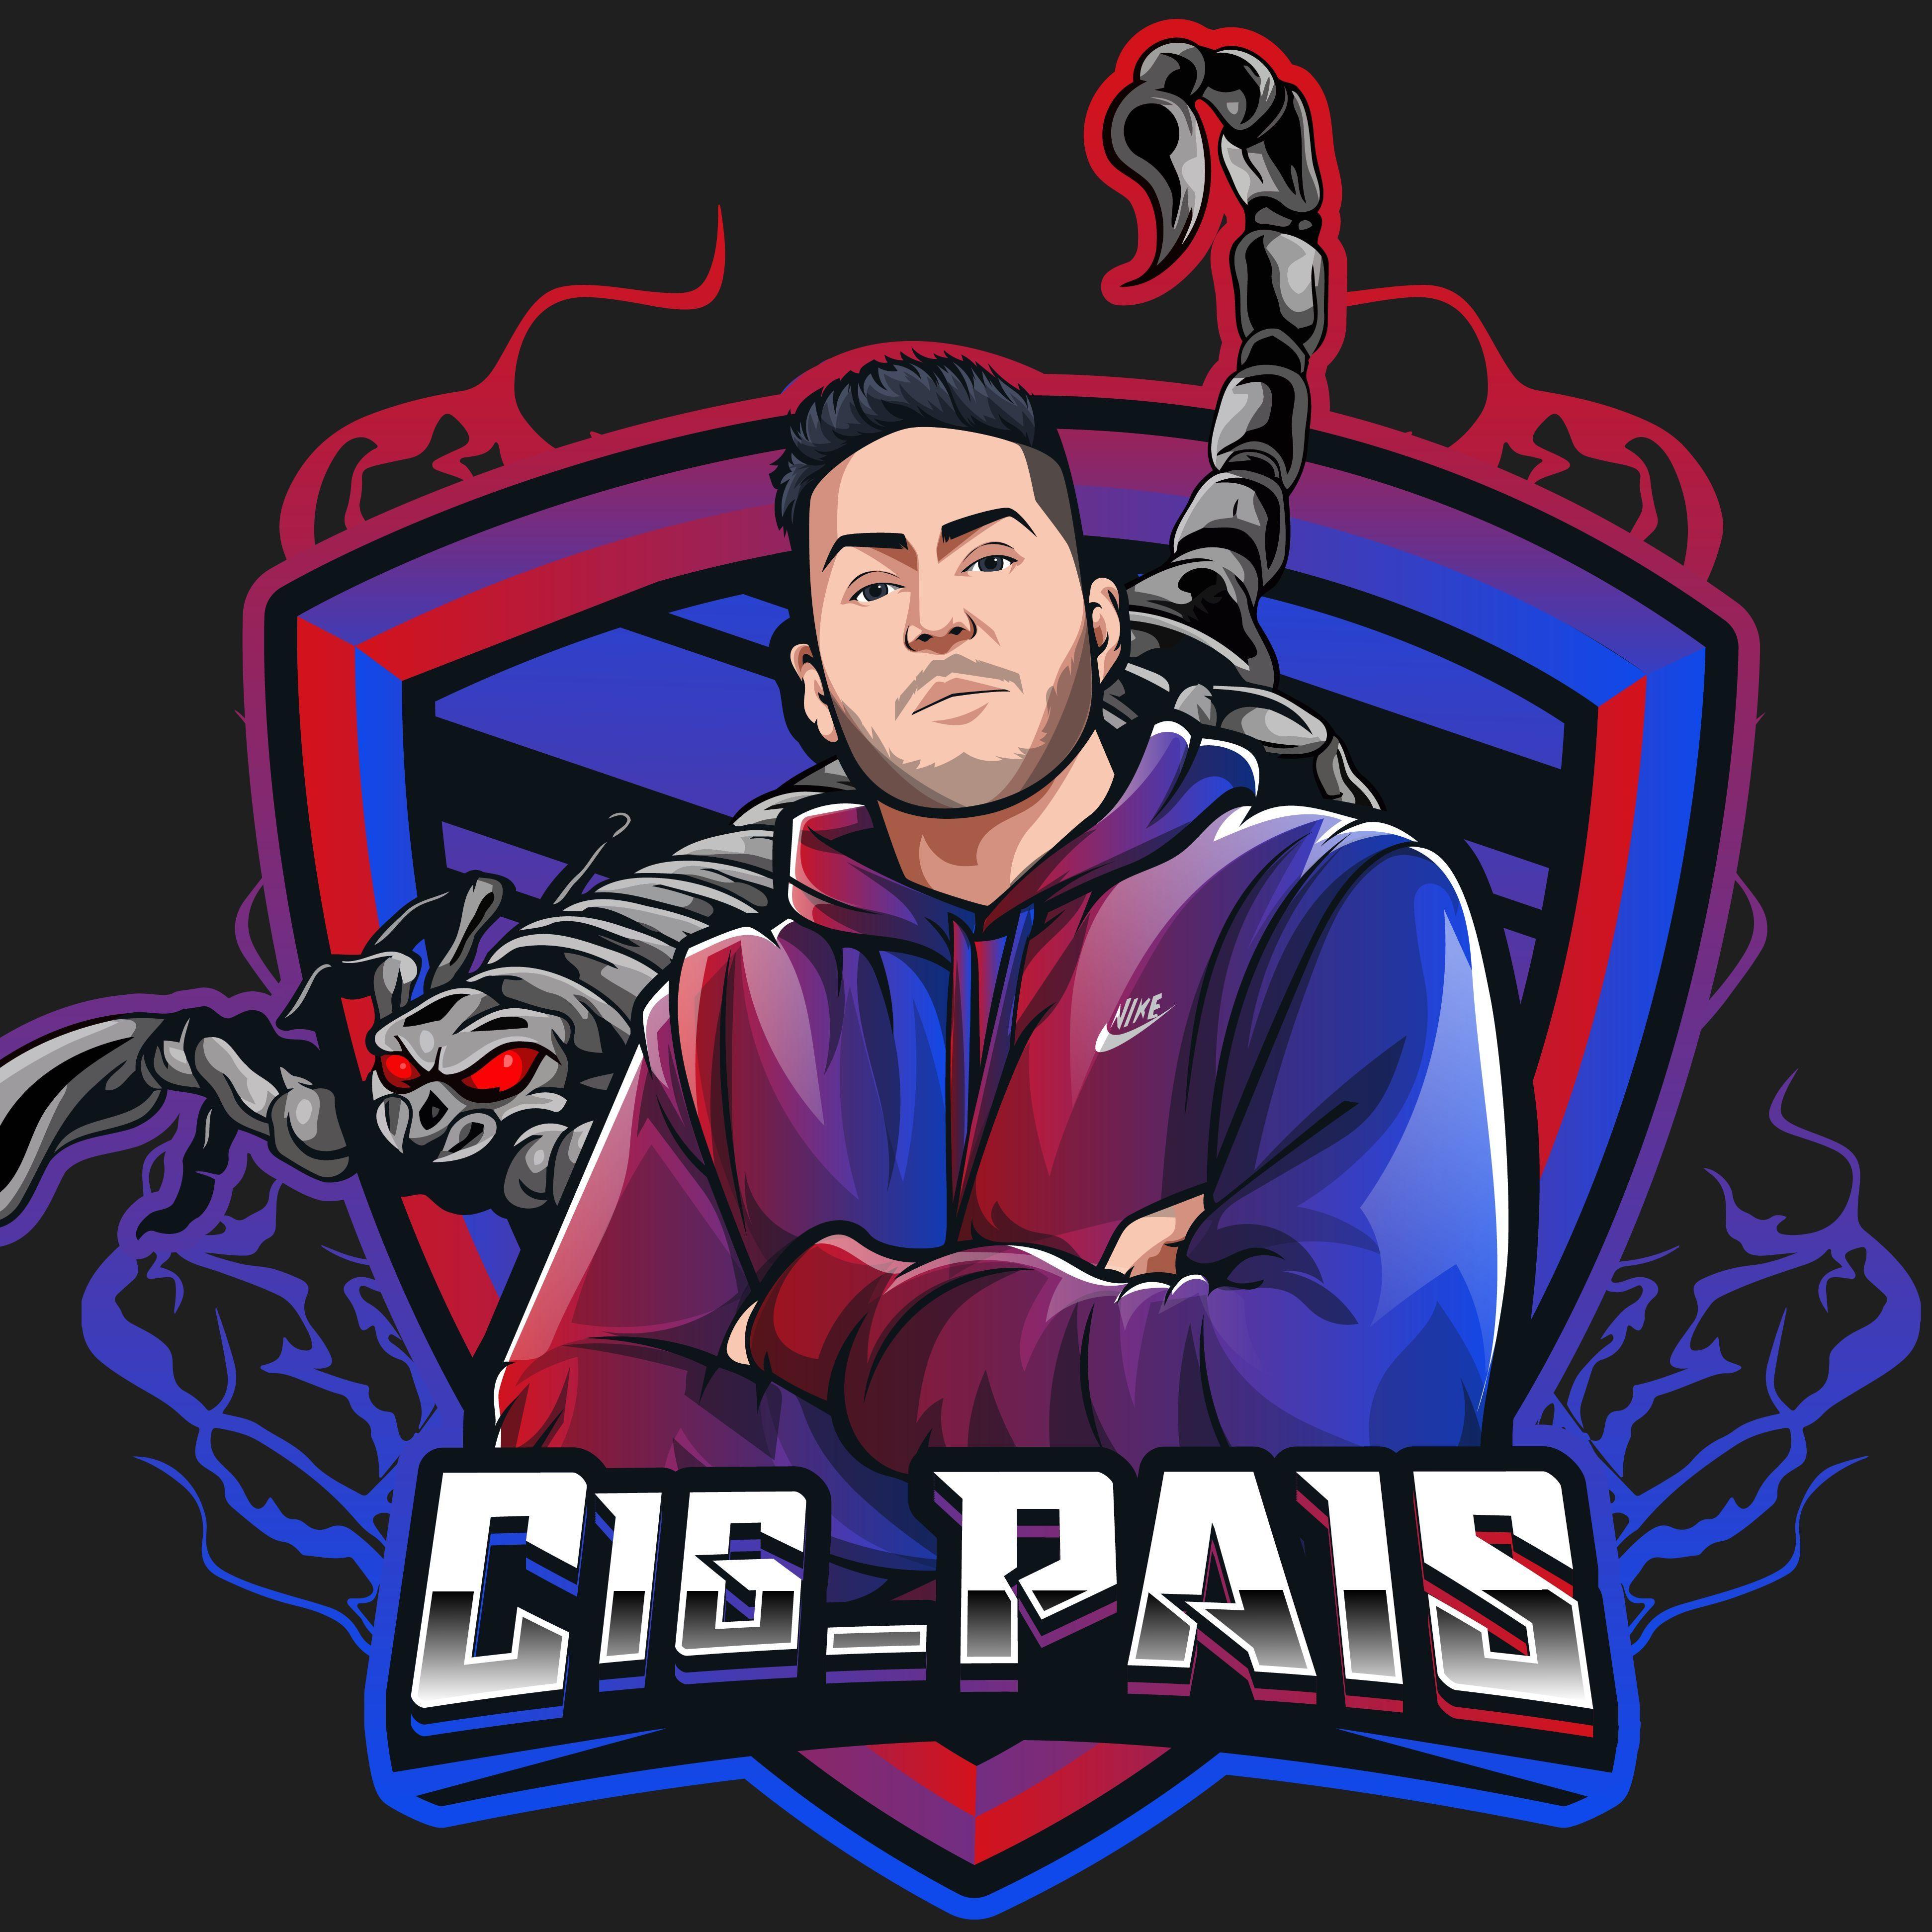 Player Cig_PAIS avatar